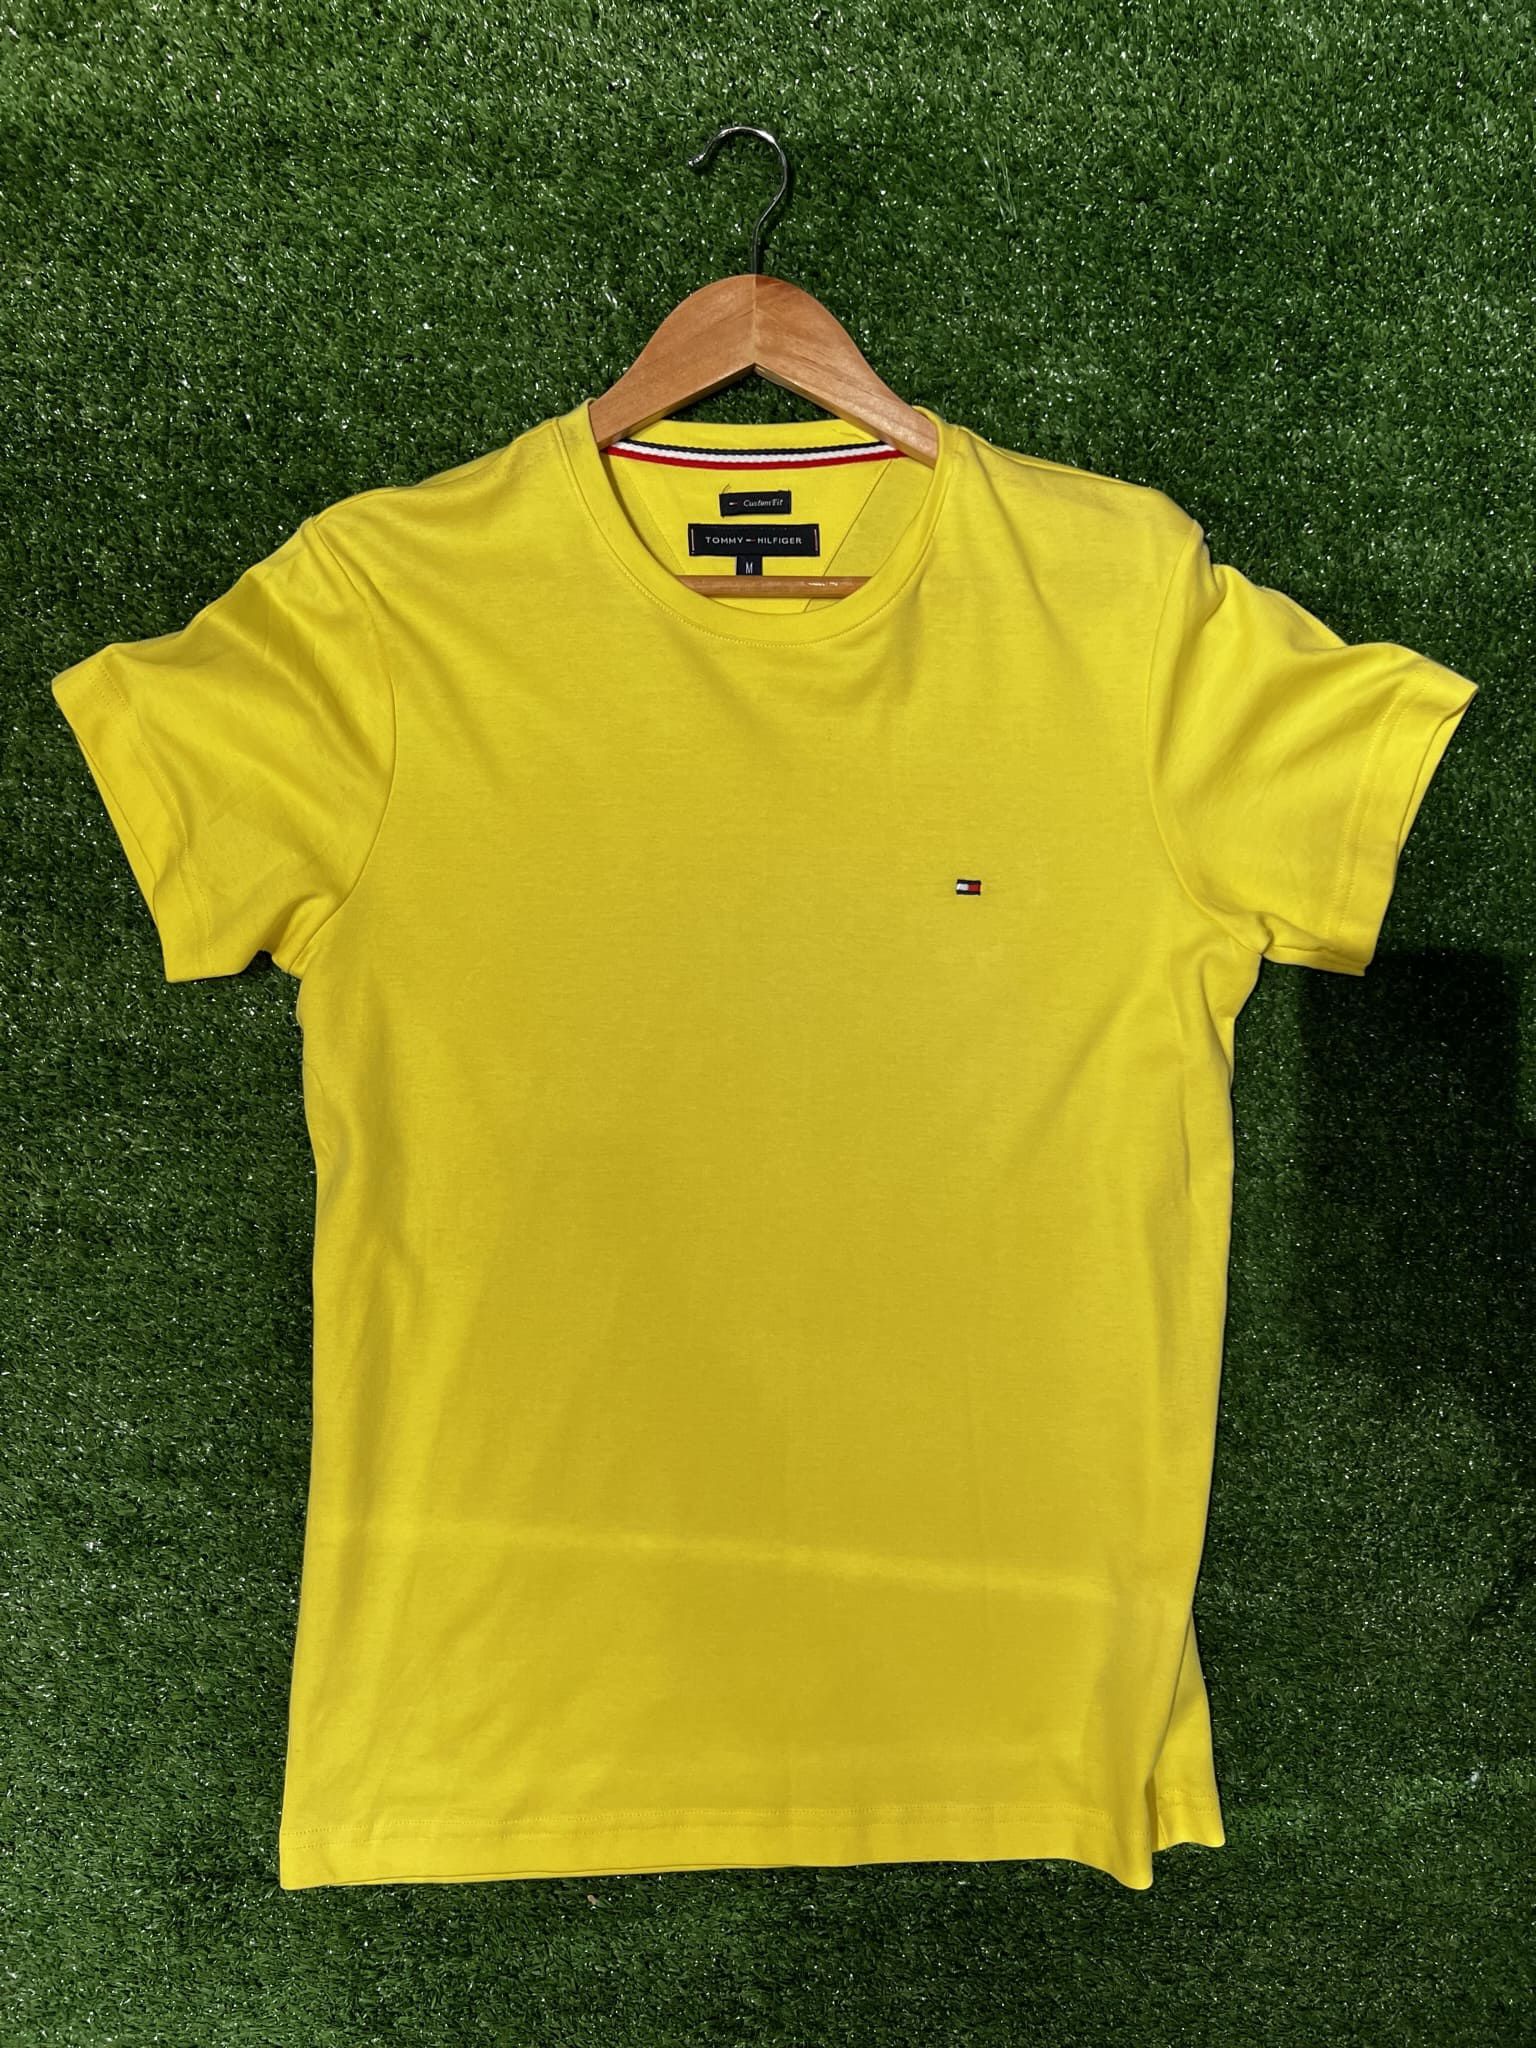 Camiseta Tommy Hilfiger Classic Amarela